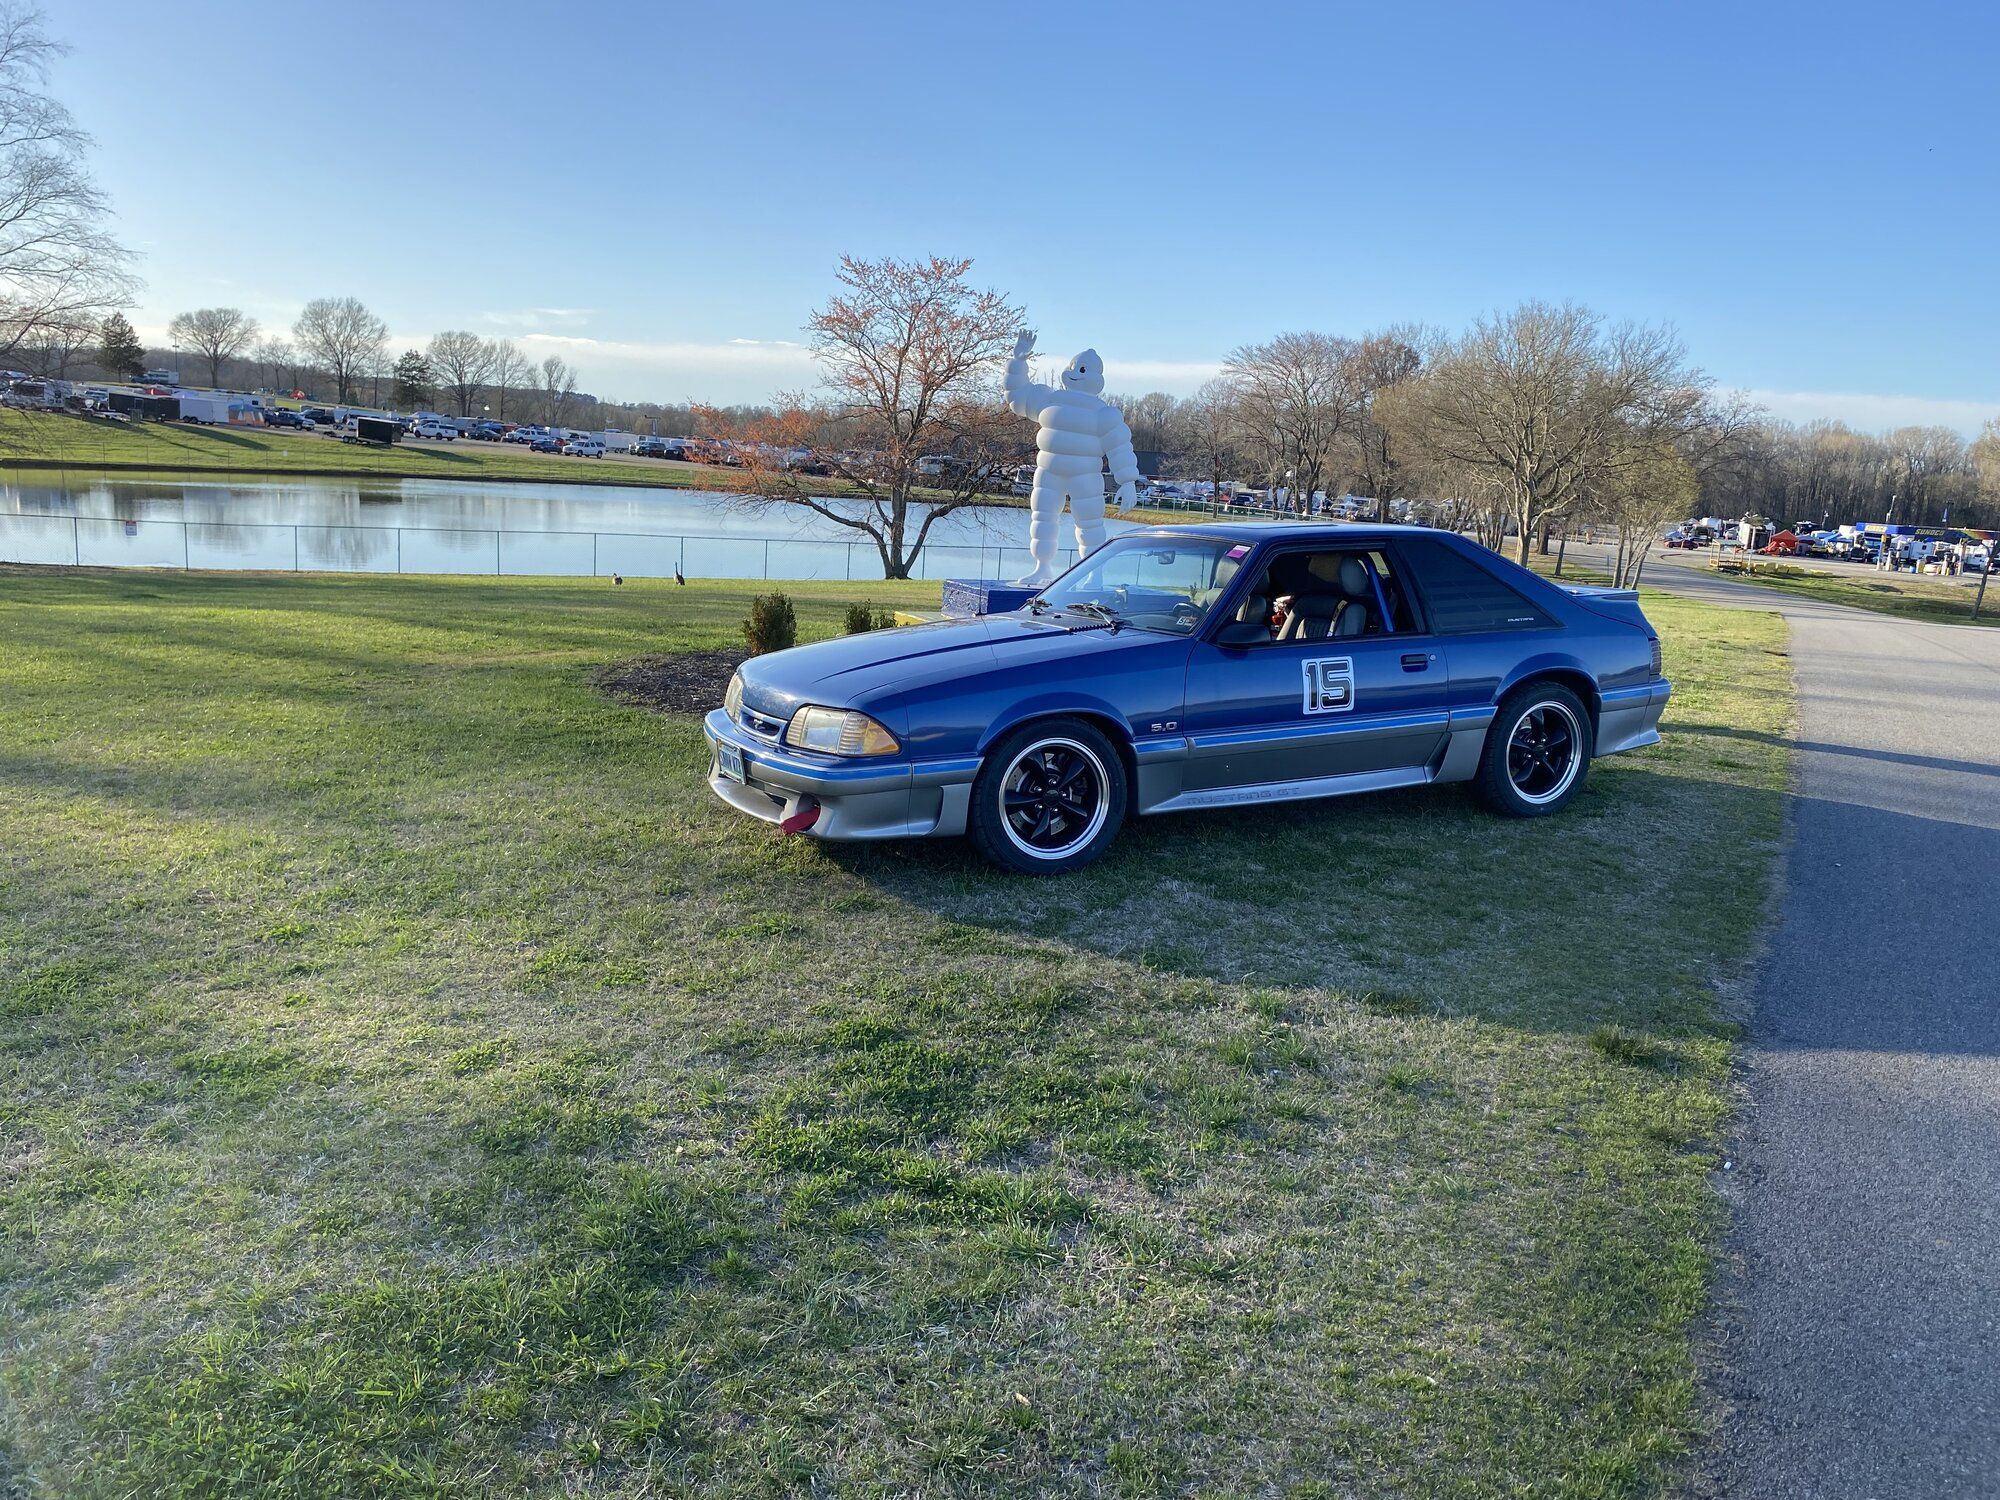 1988 Mustang
(The Virginian)